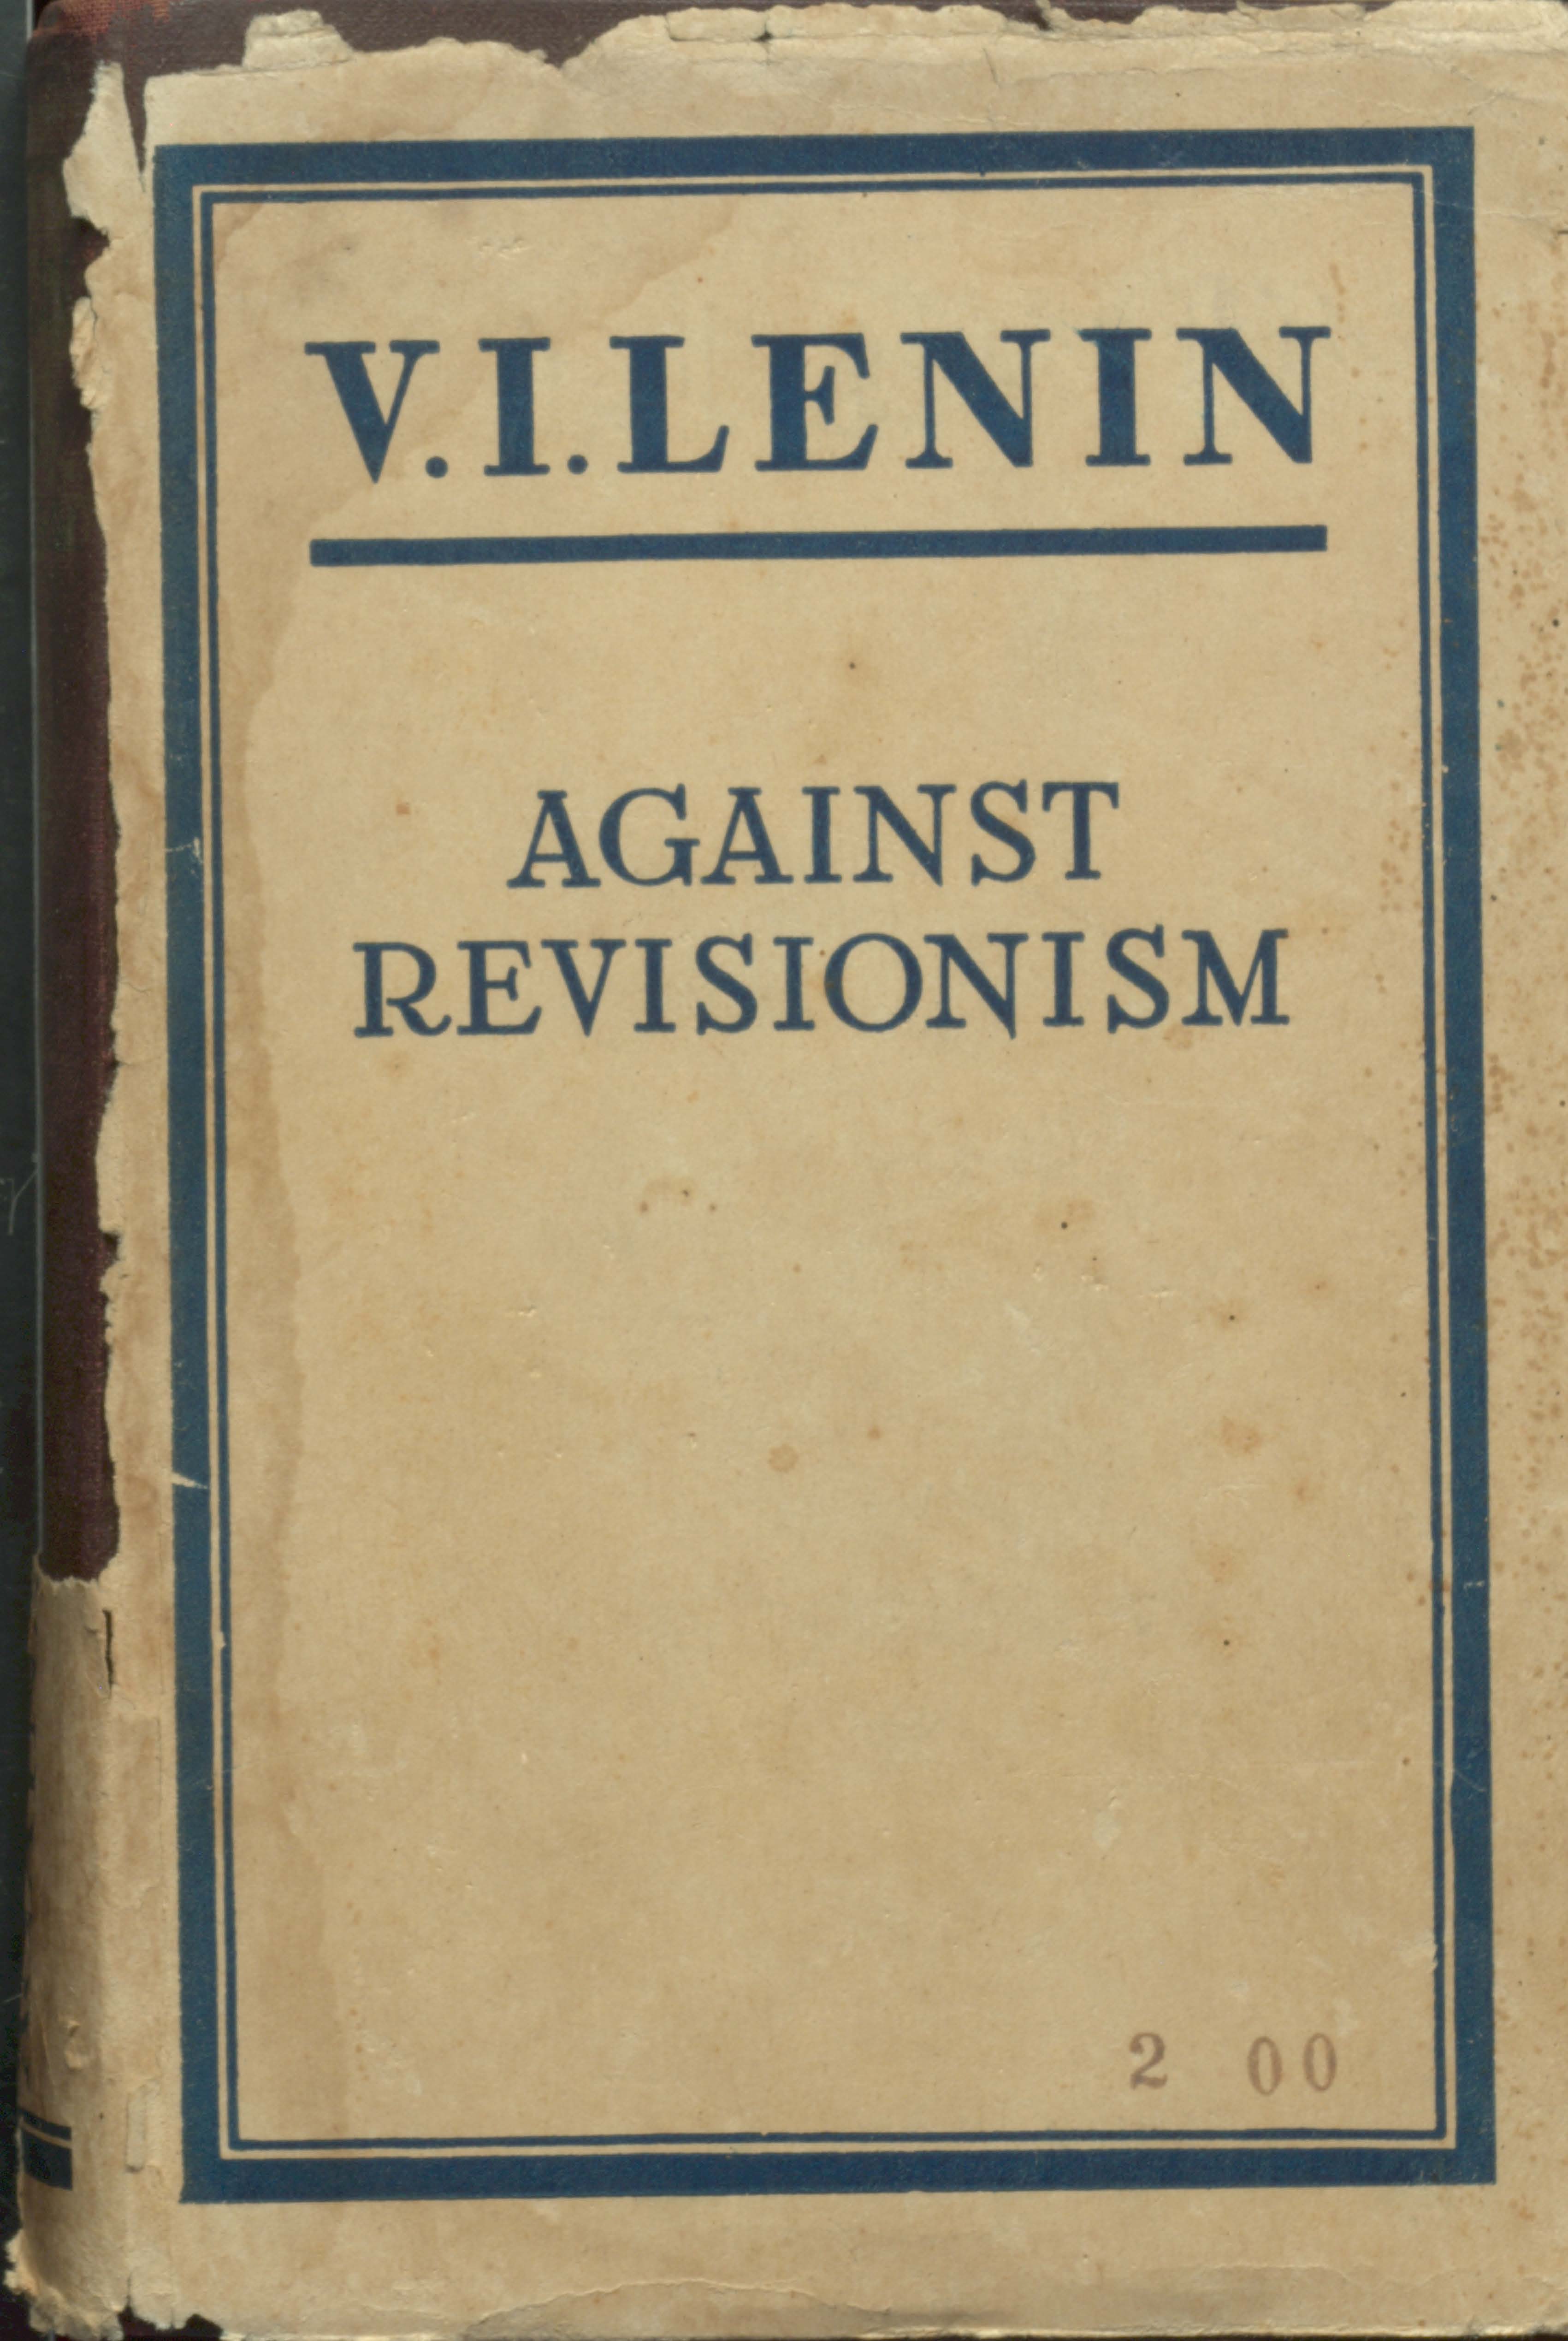 V.L.Lenin against revisionism